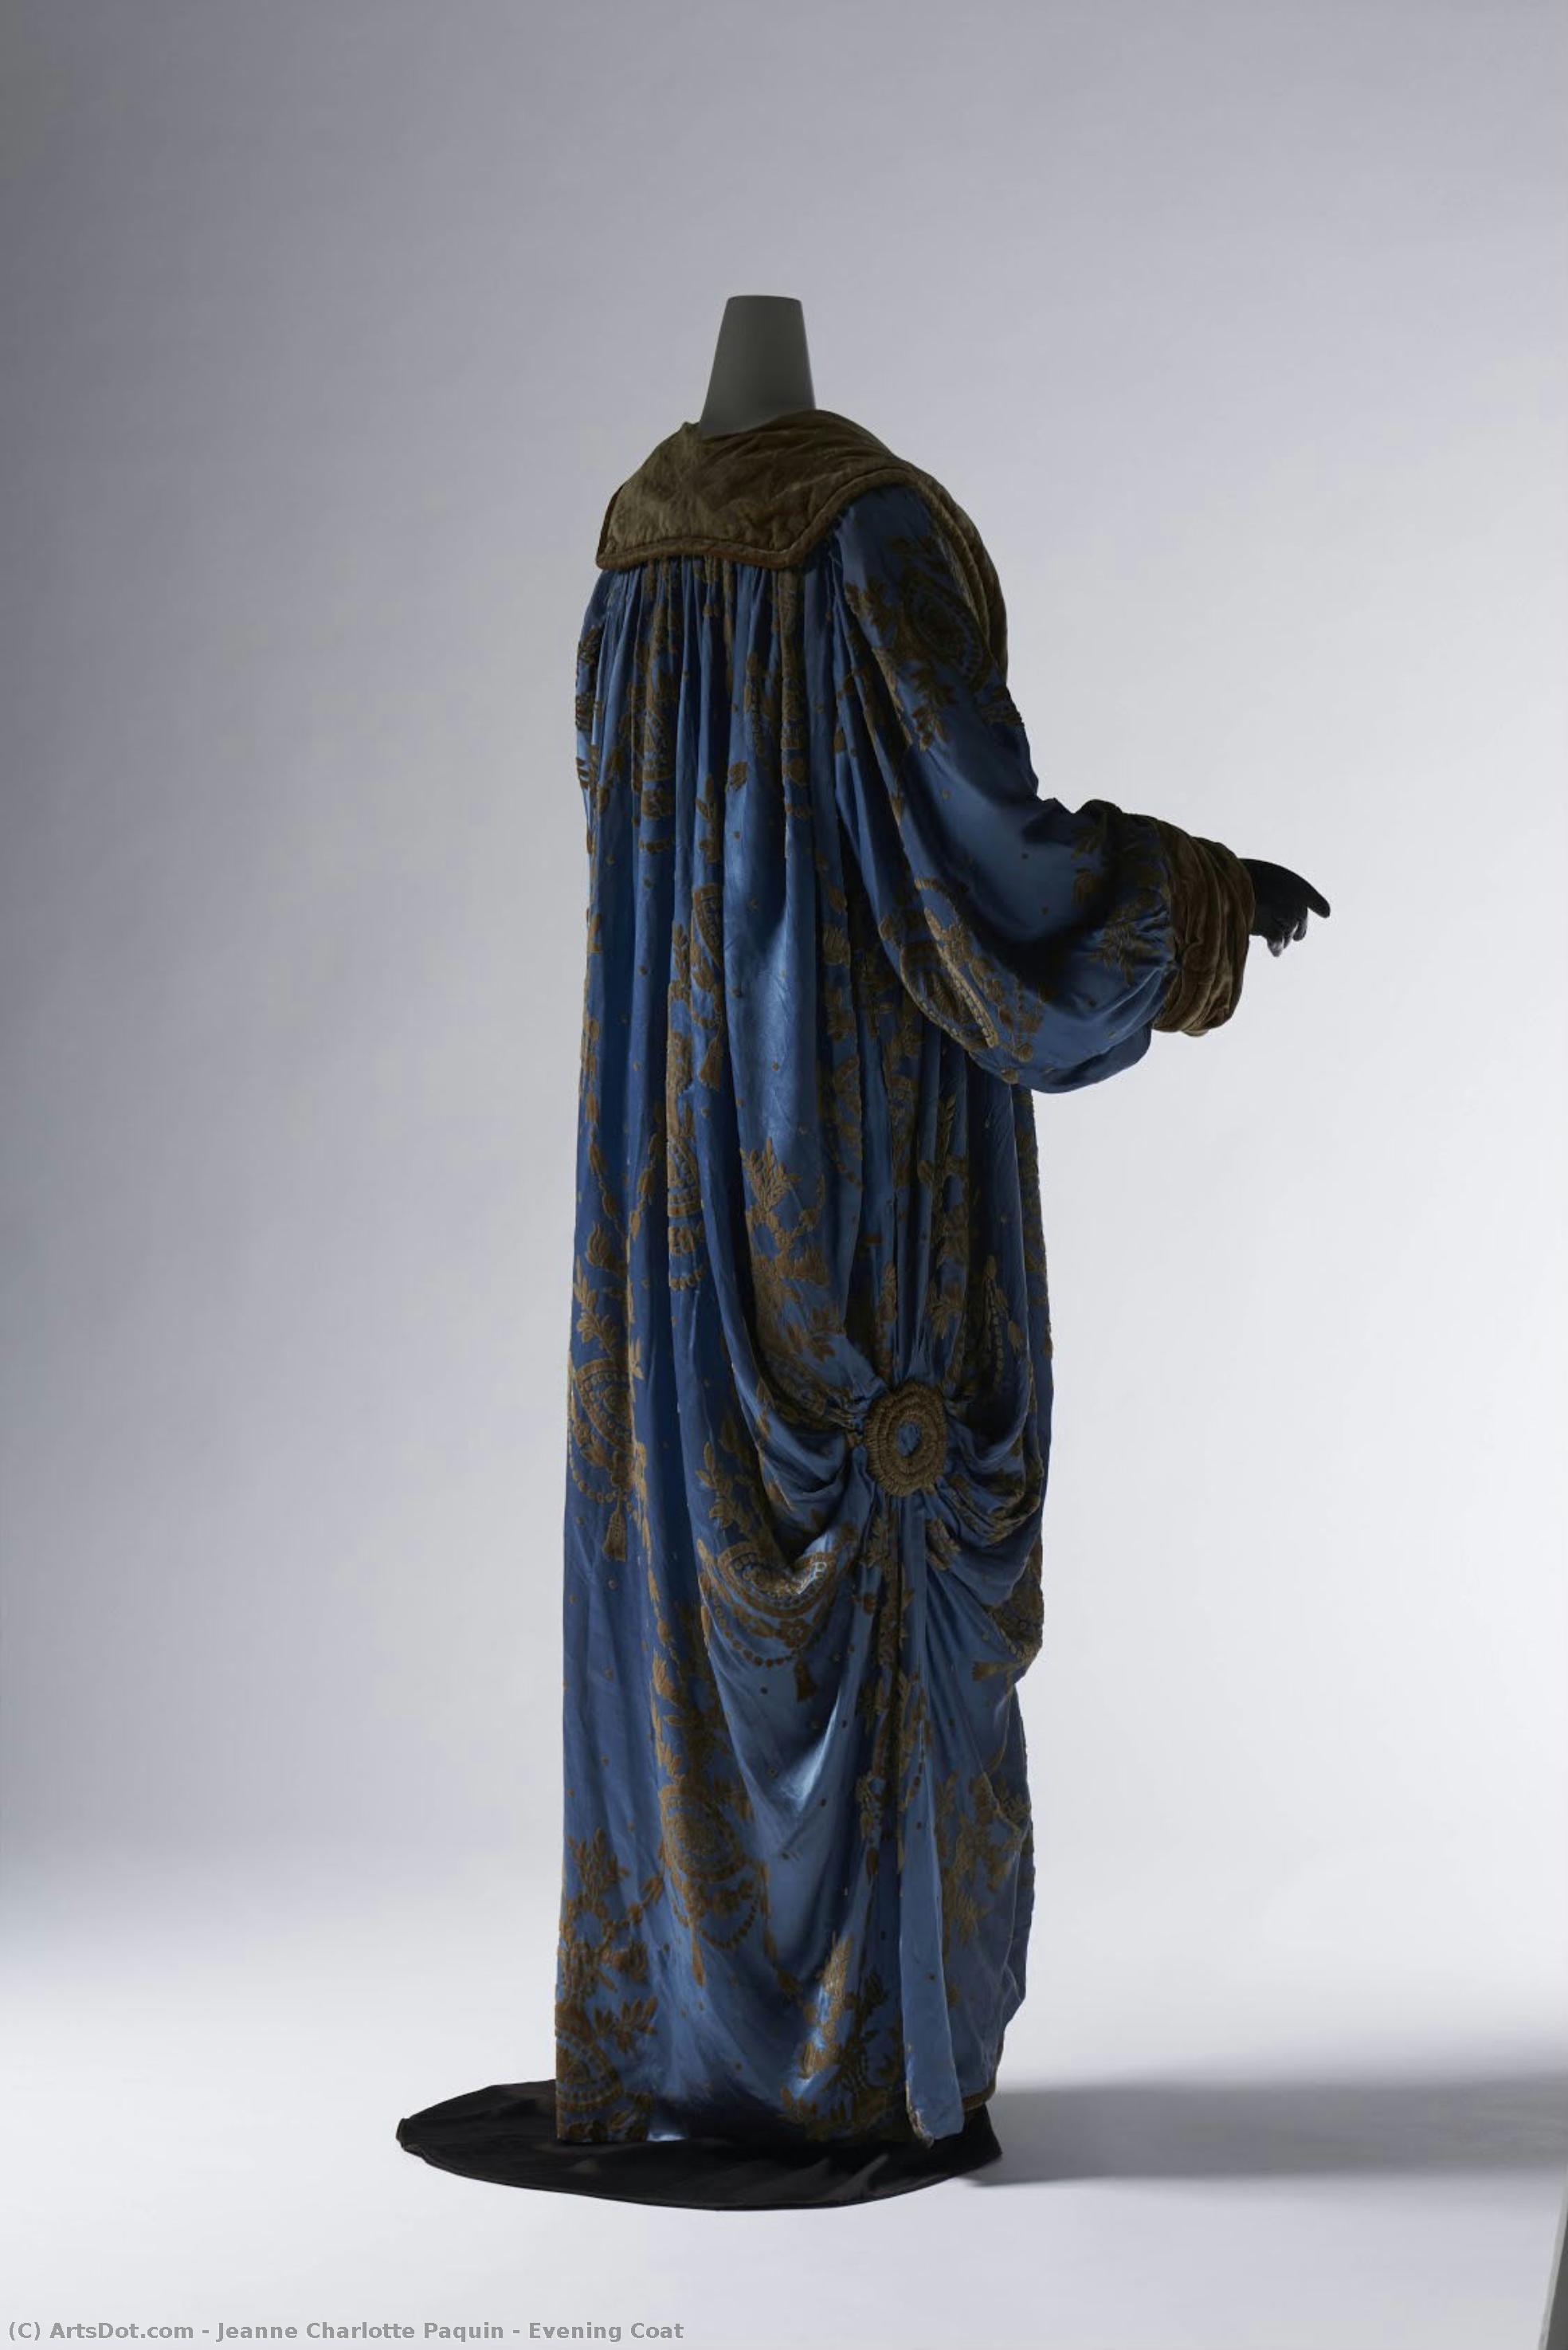  Museum Art Reproductions Evening Coat, 1909 by Jeanne Charlotte Paquin (1869-1936, France) | ArtsDot.com